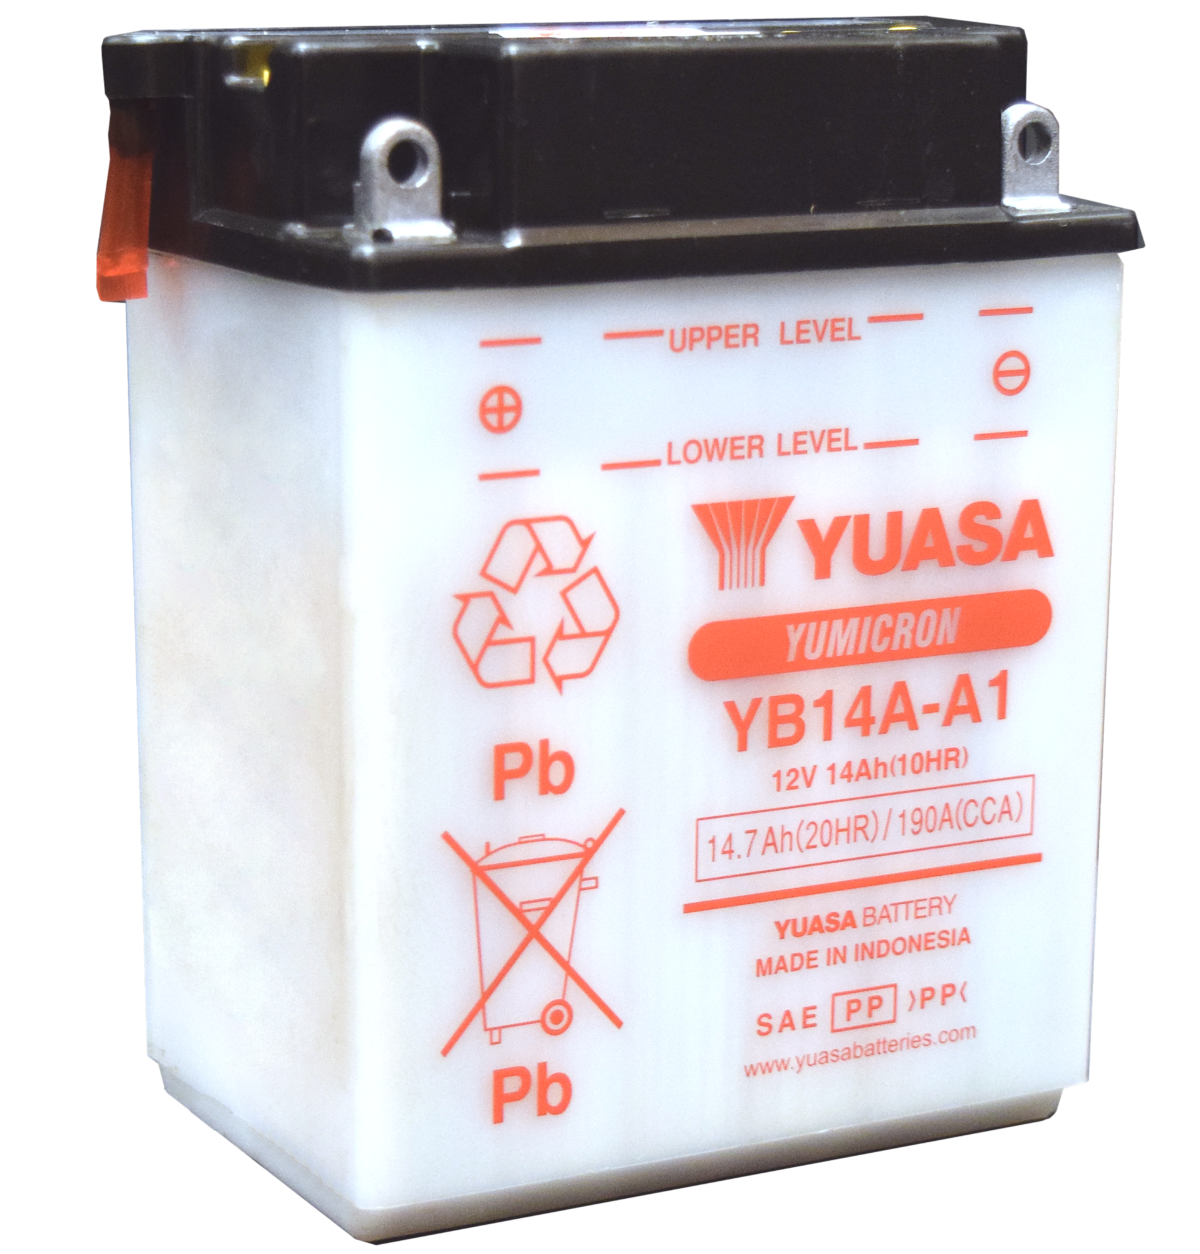 Yuasa YB14A-A1 Yumicron Battery for motorsports, powersports, and motorcycle